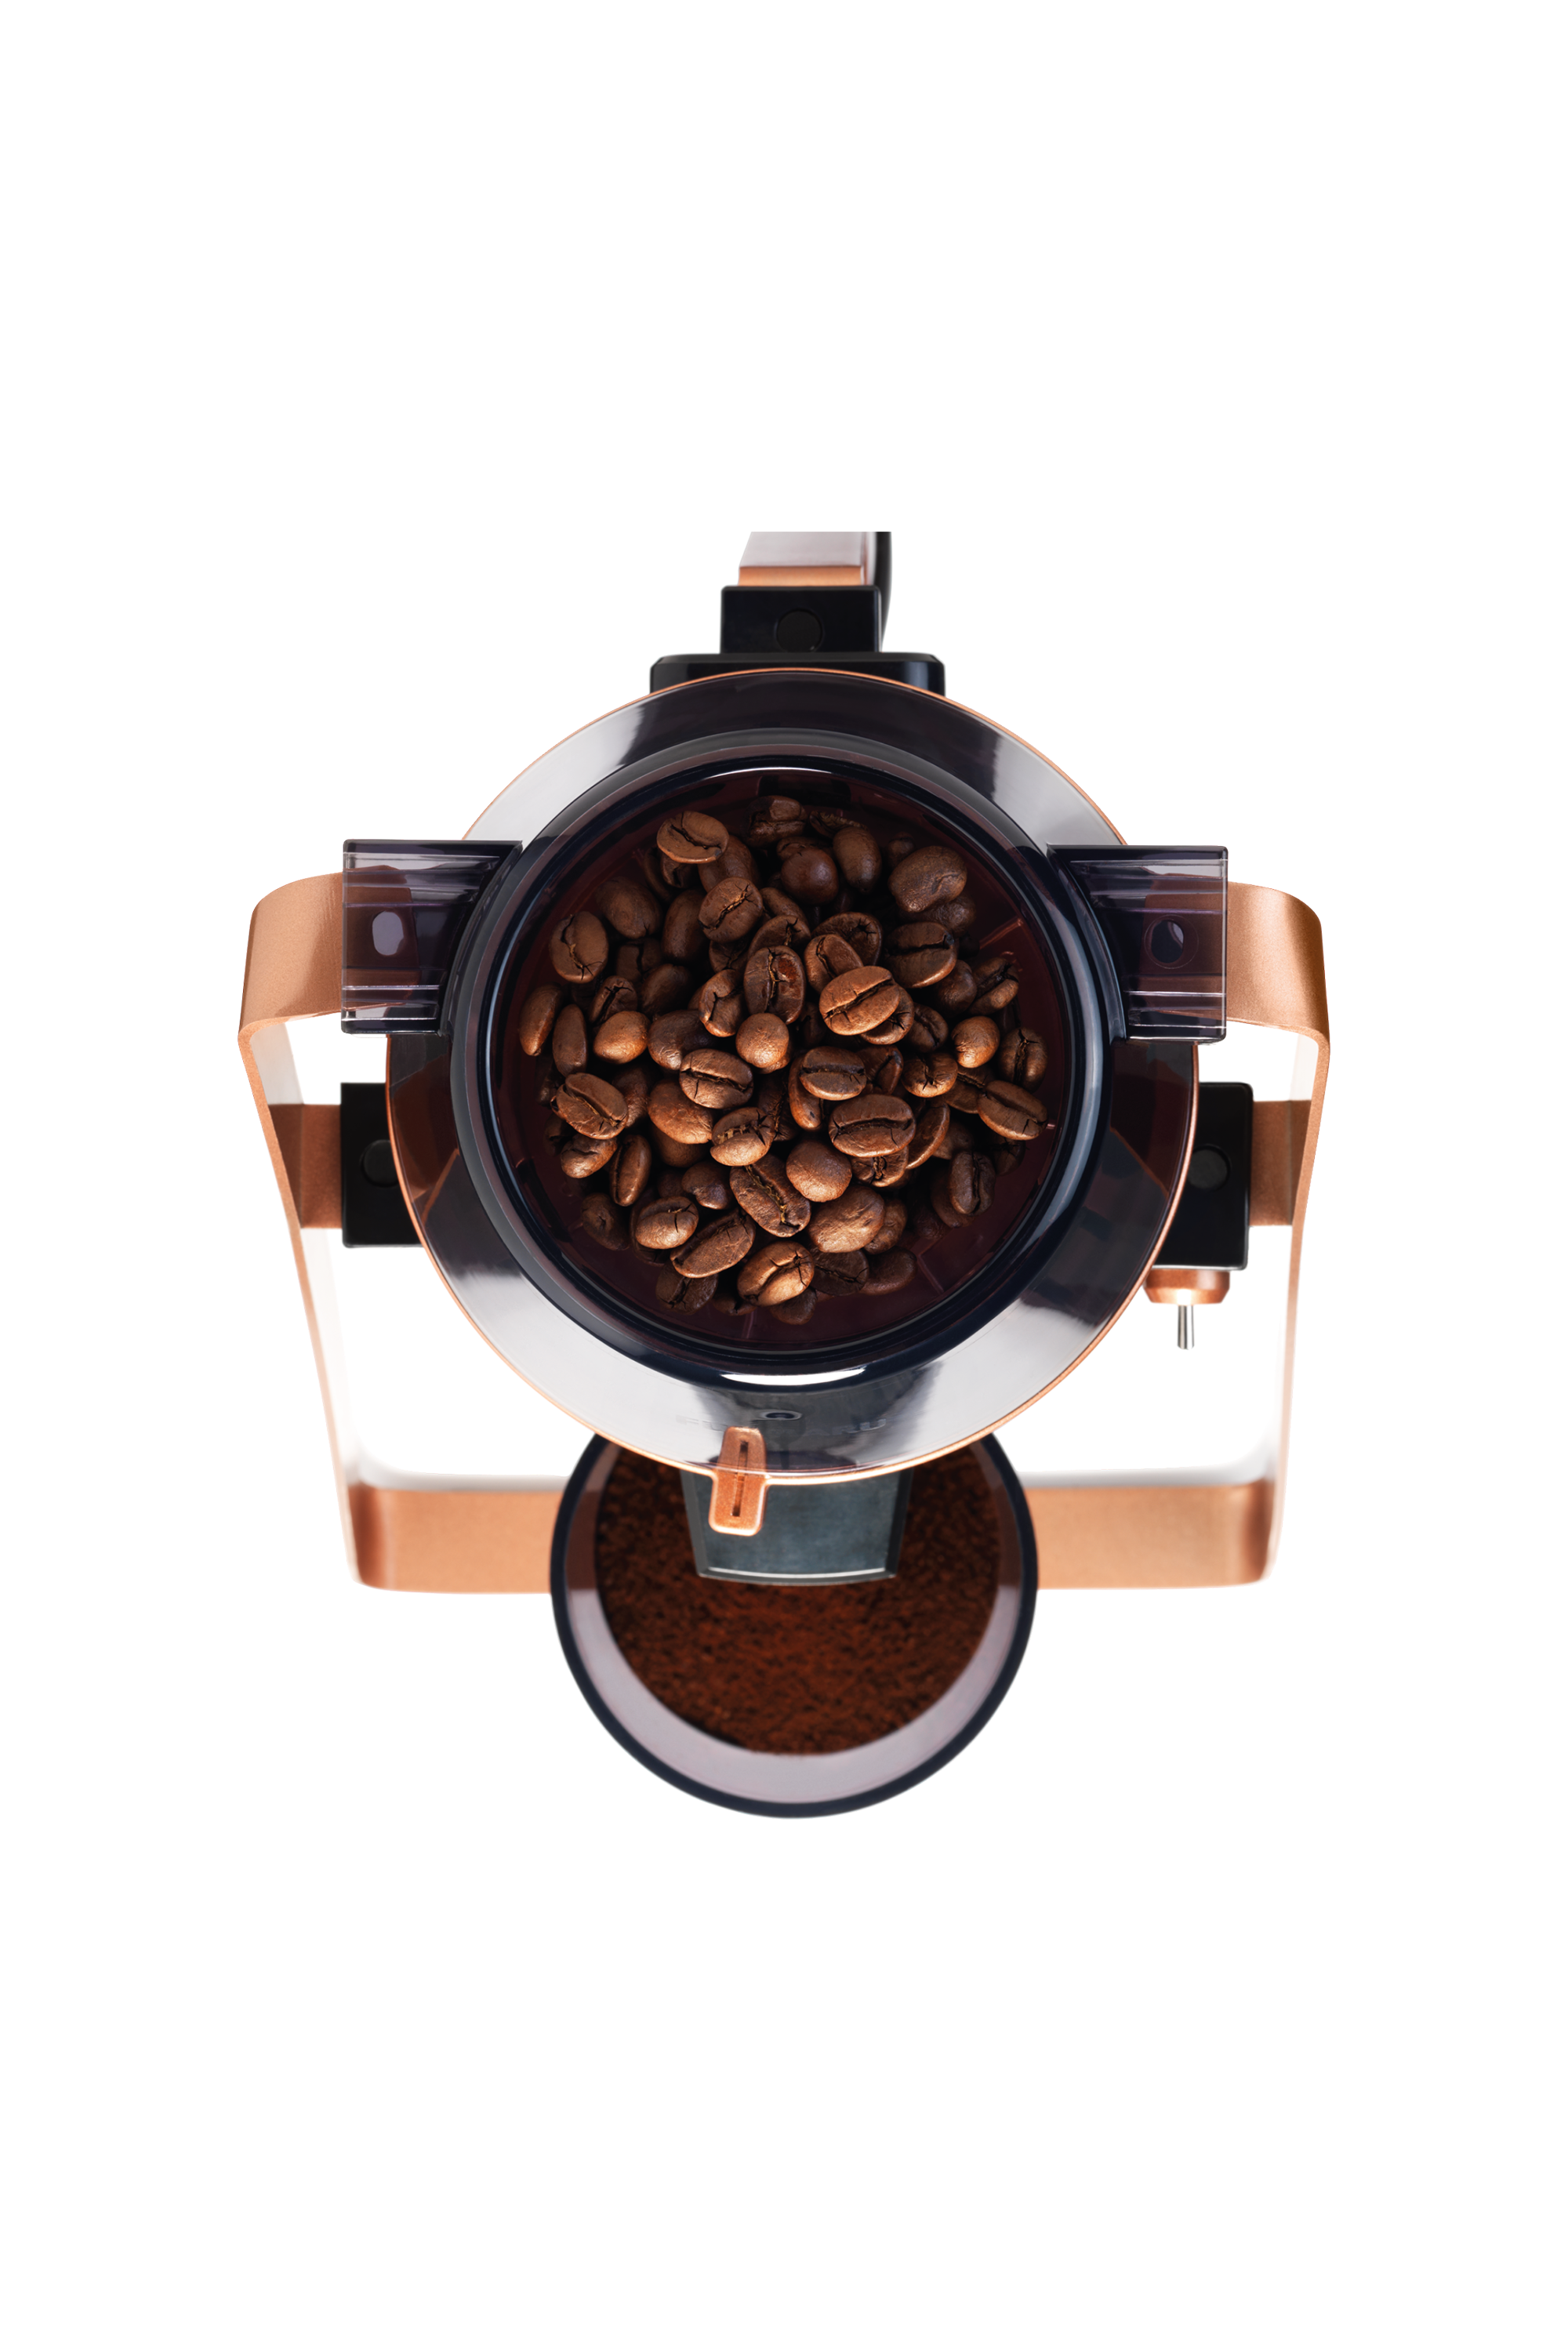 Ccg500 Coffee Grinder